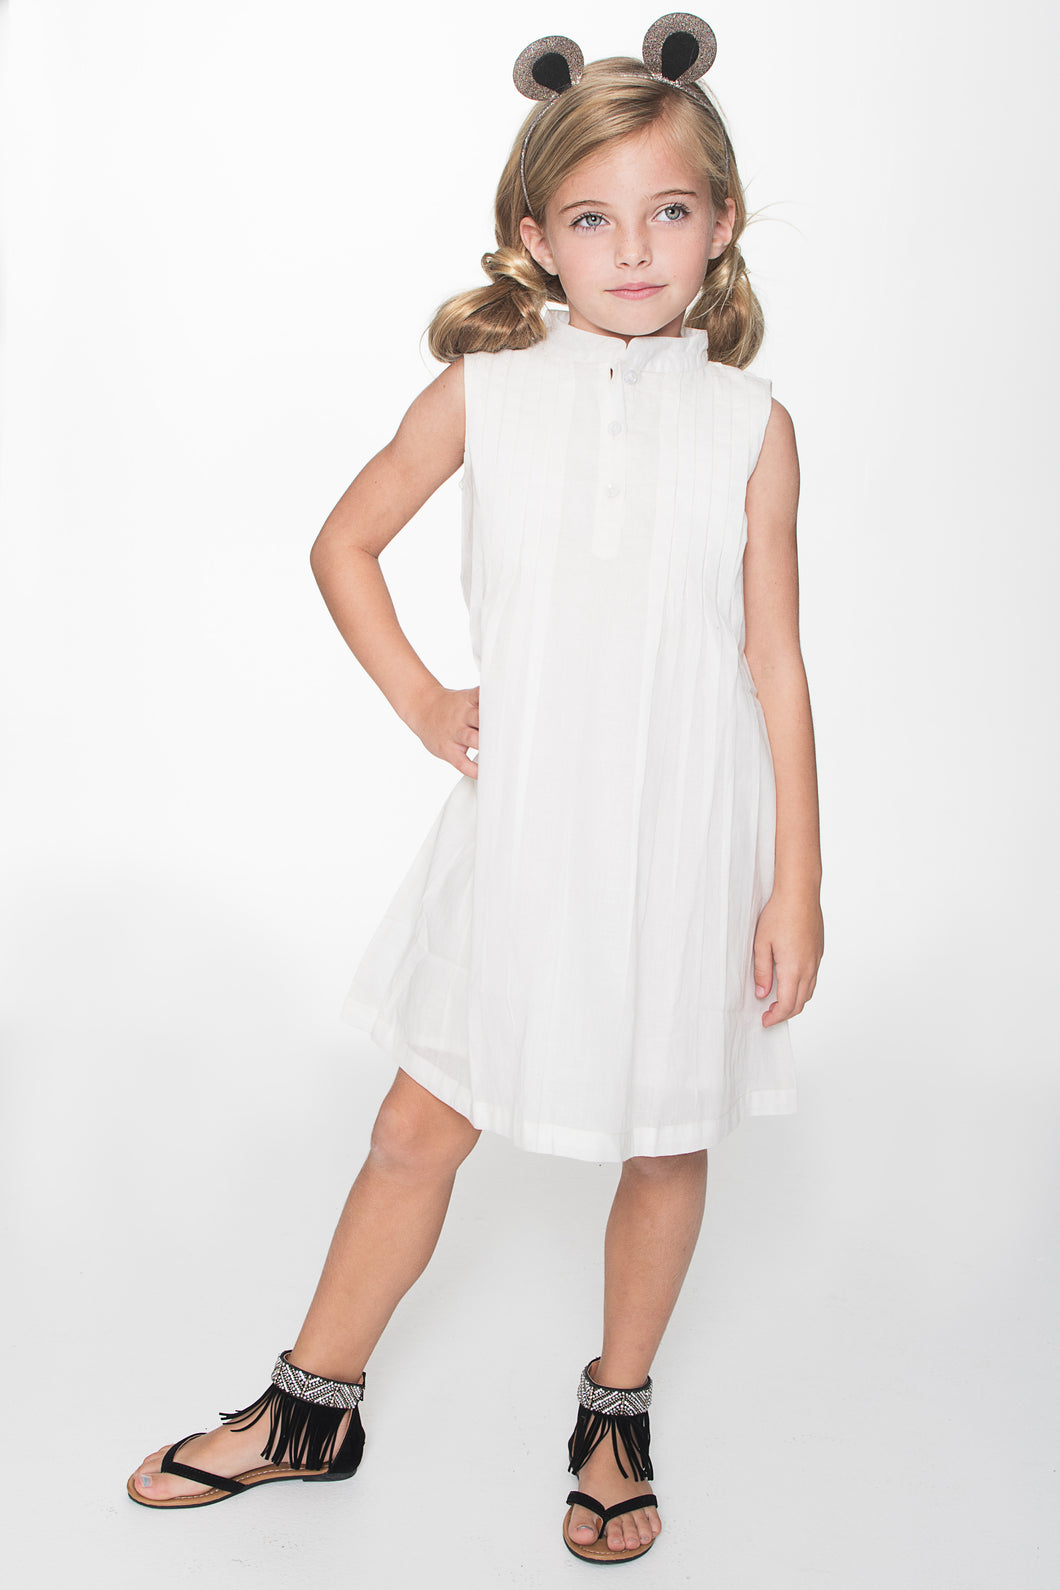 Off-White Pin-tuck Detail Dress - Kids Wholesale Boutique Clothing, Dress - Girls Dresses, Yo Baby Wholesale - Yo Baby